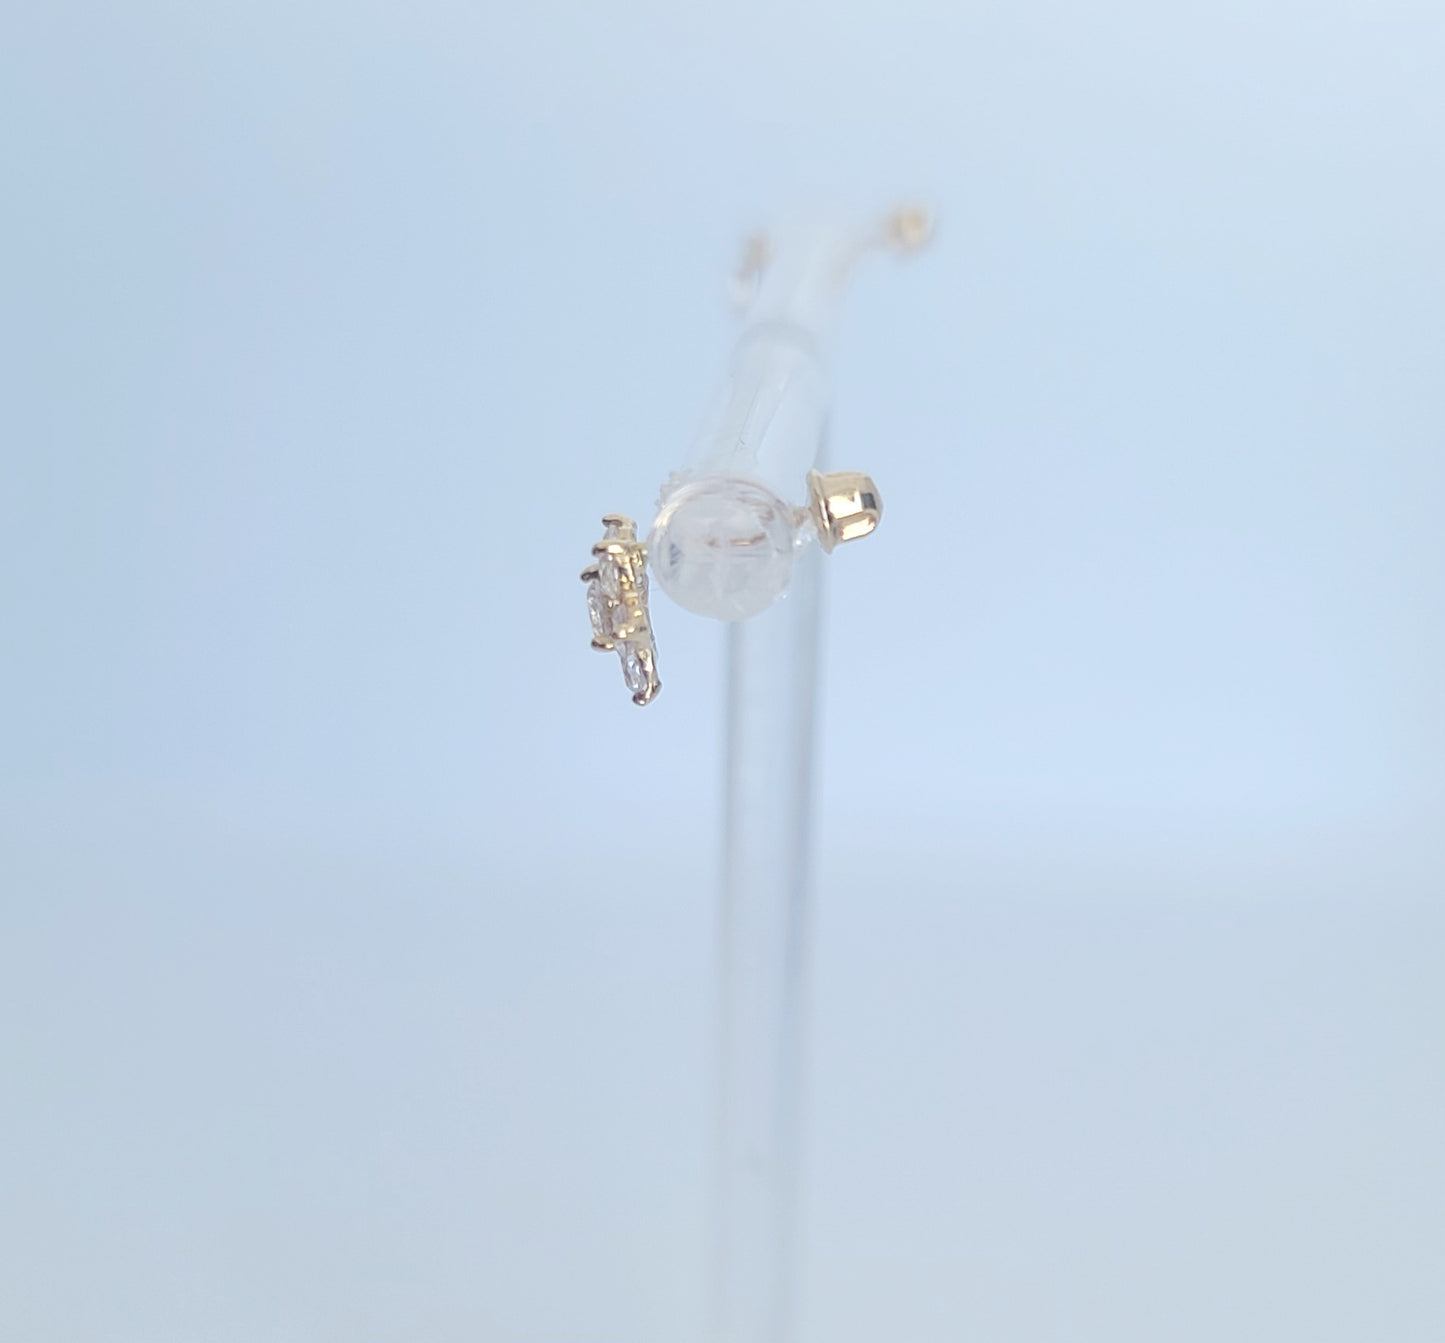 14k Gold Flower Stud Earrings